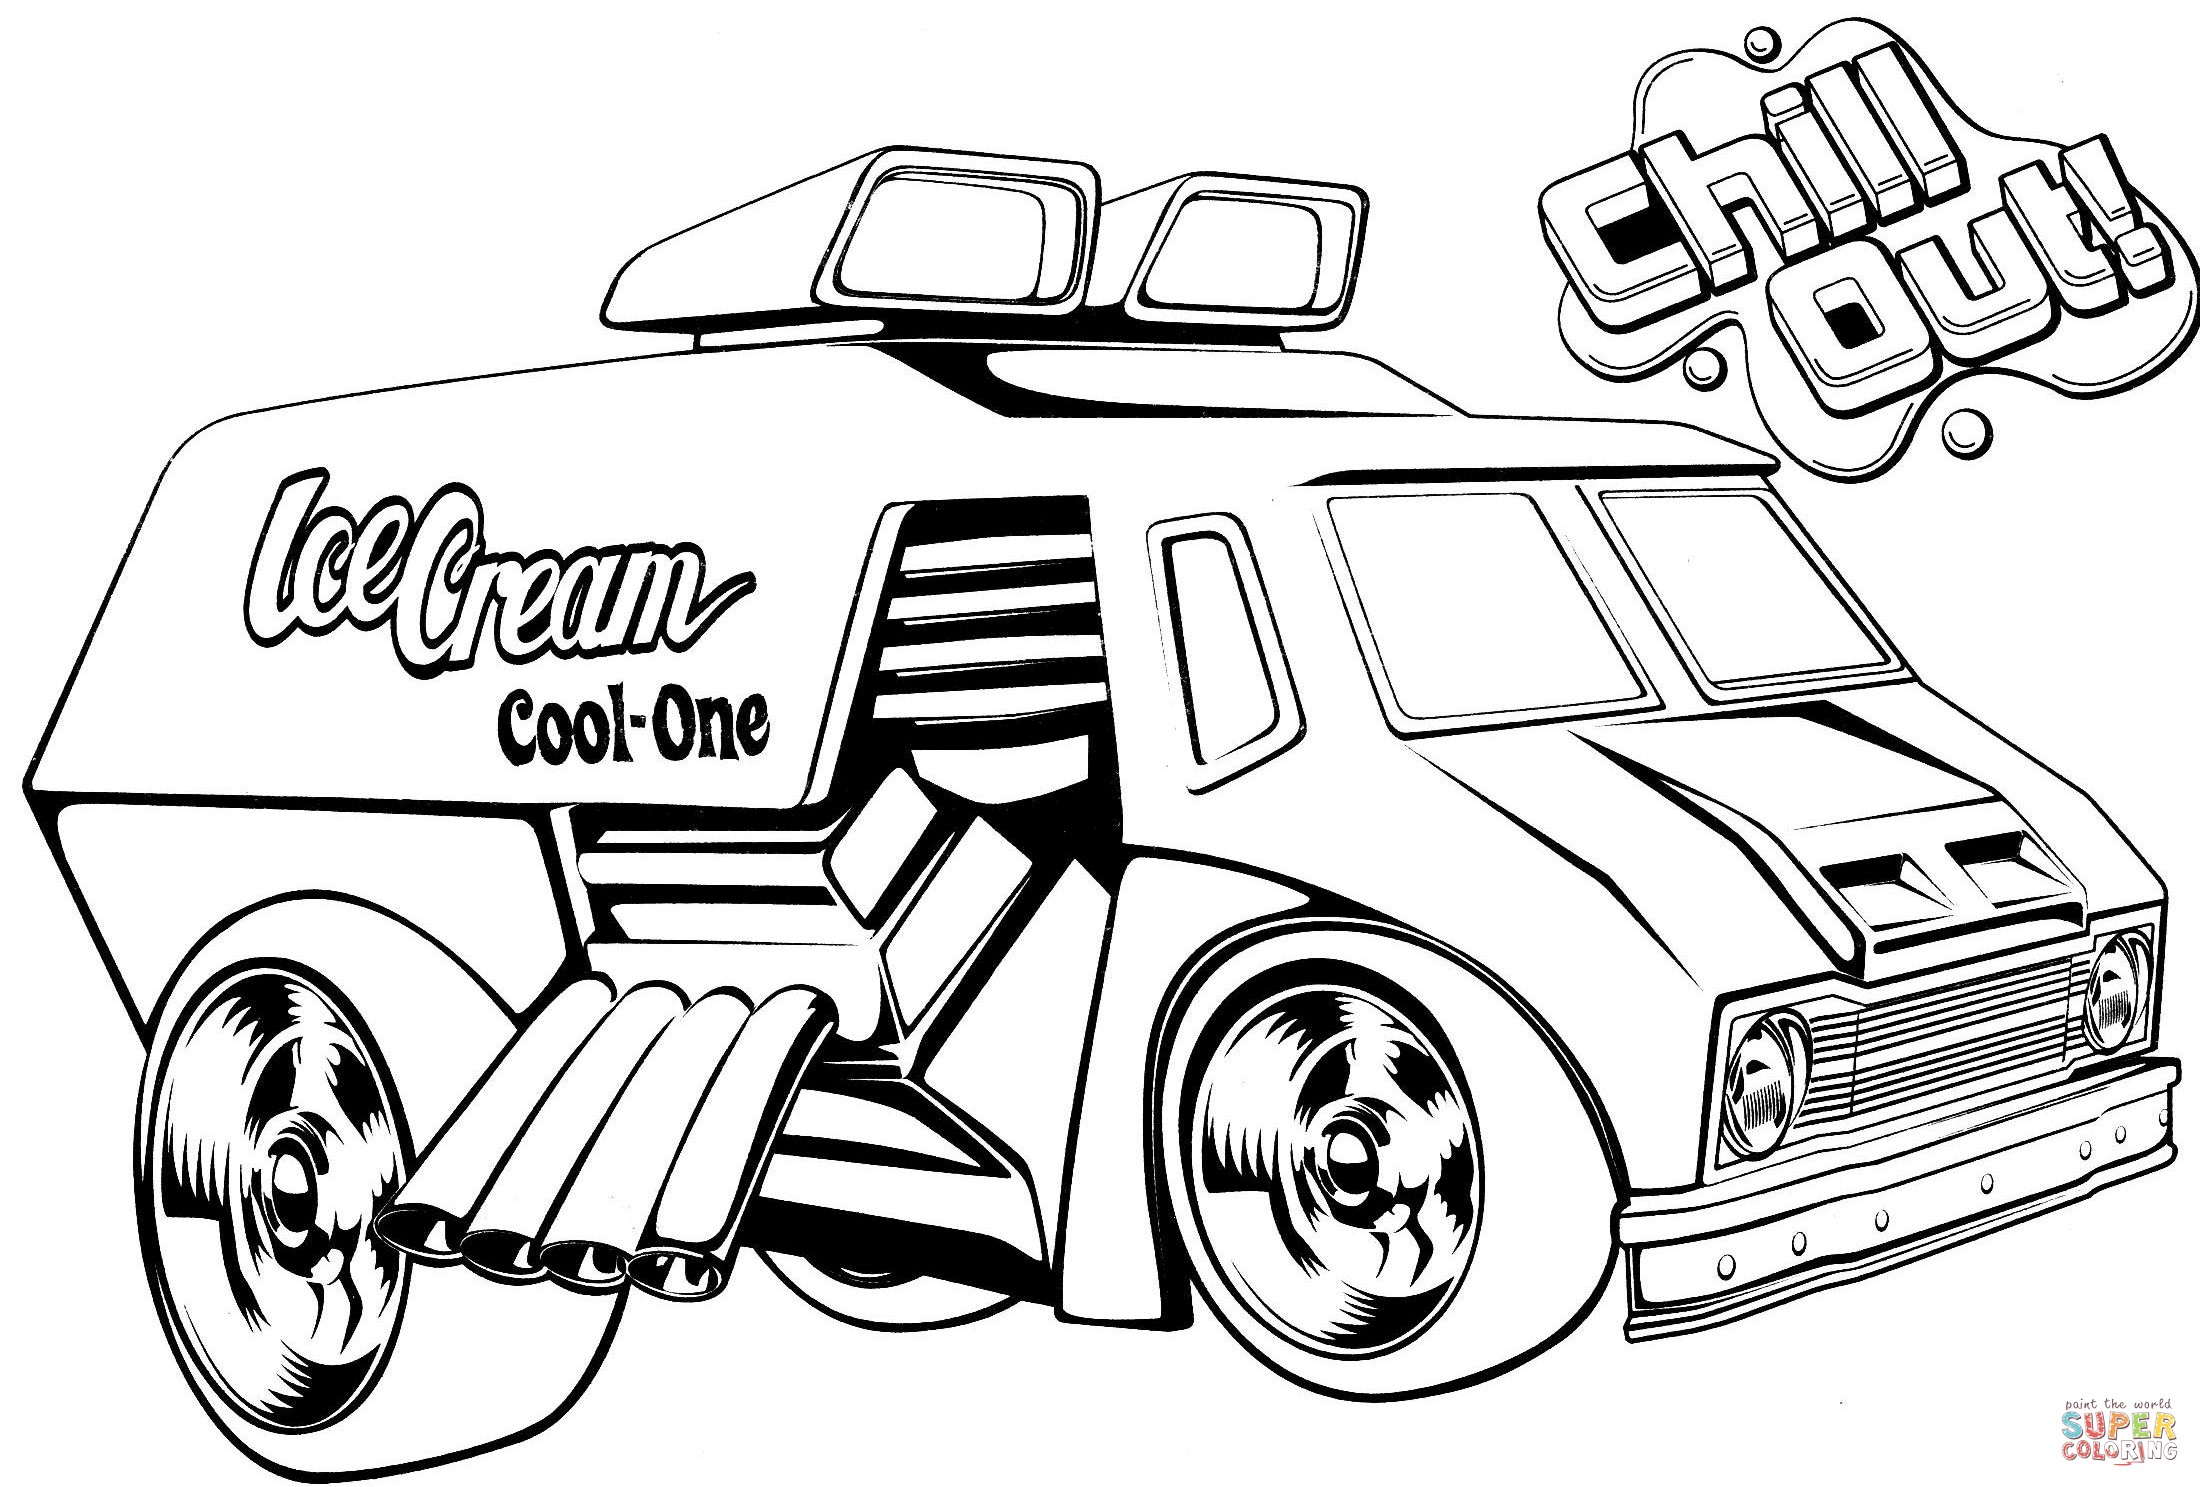 Car Wash Coloring Pages at GetColorings.com | Free printable colorings ...